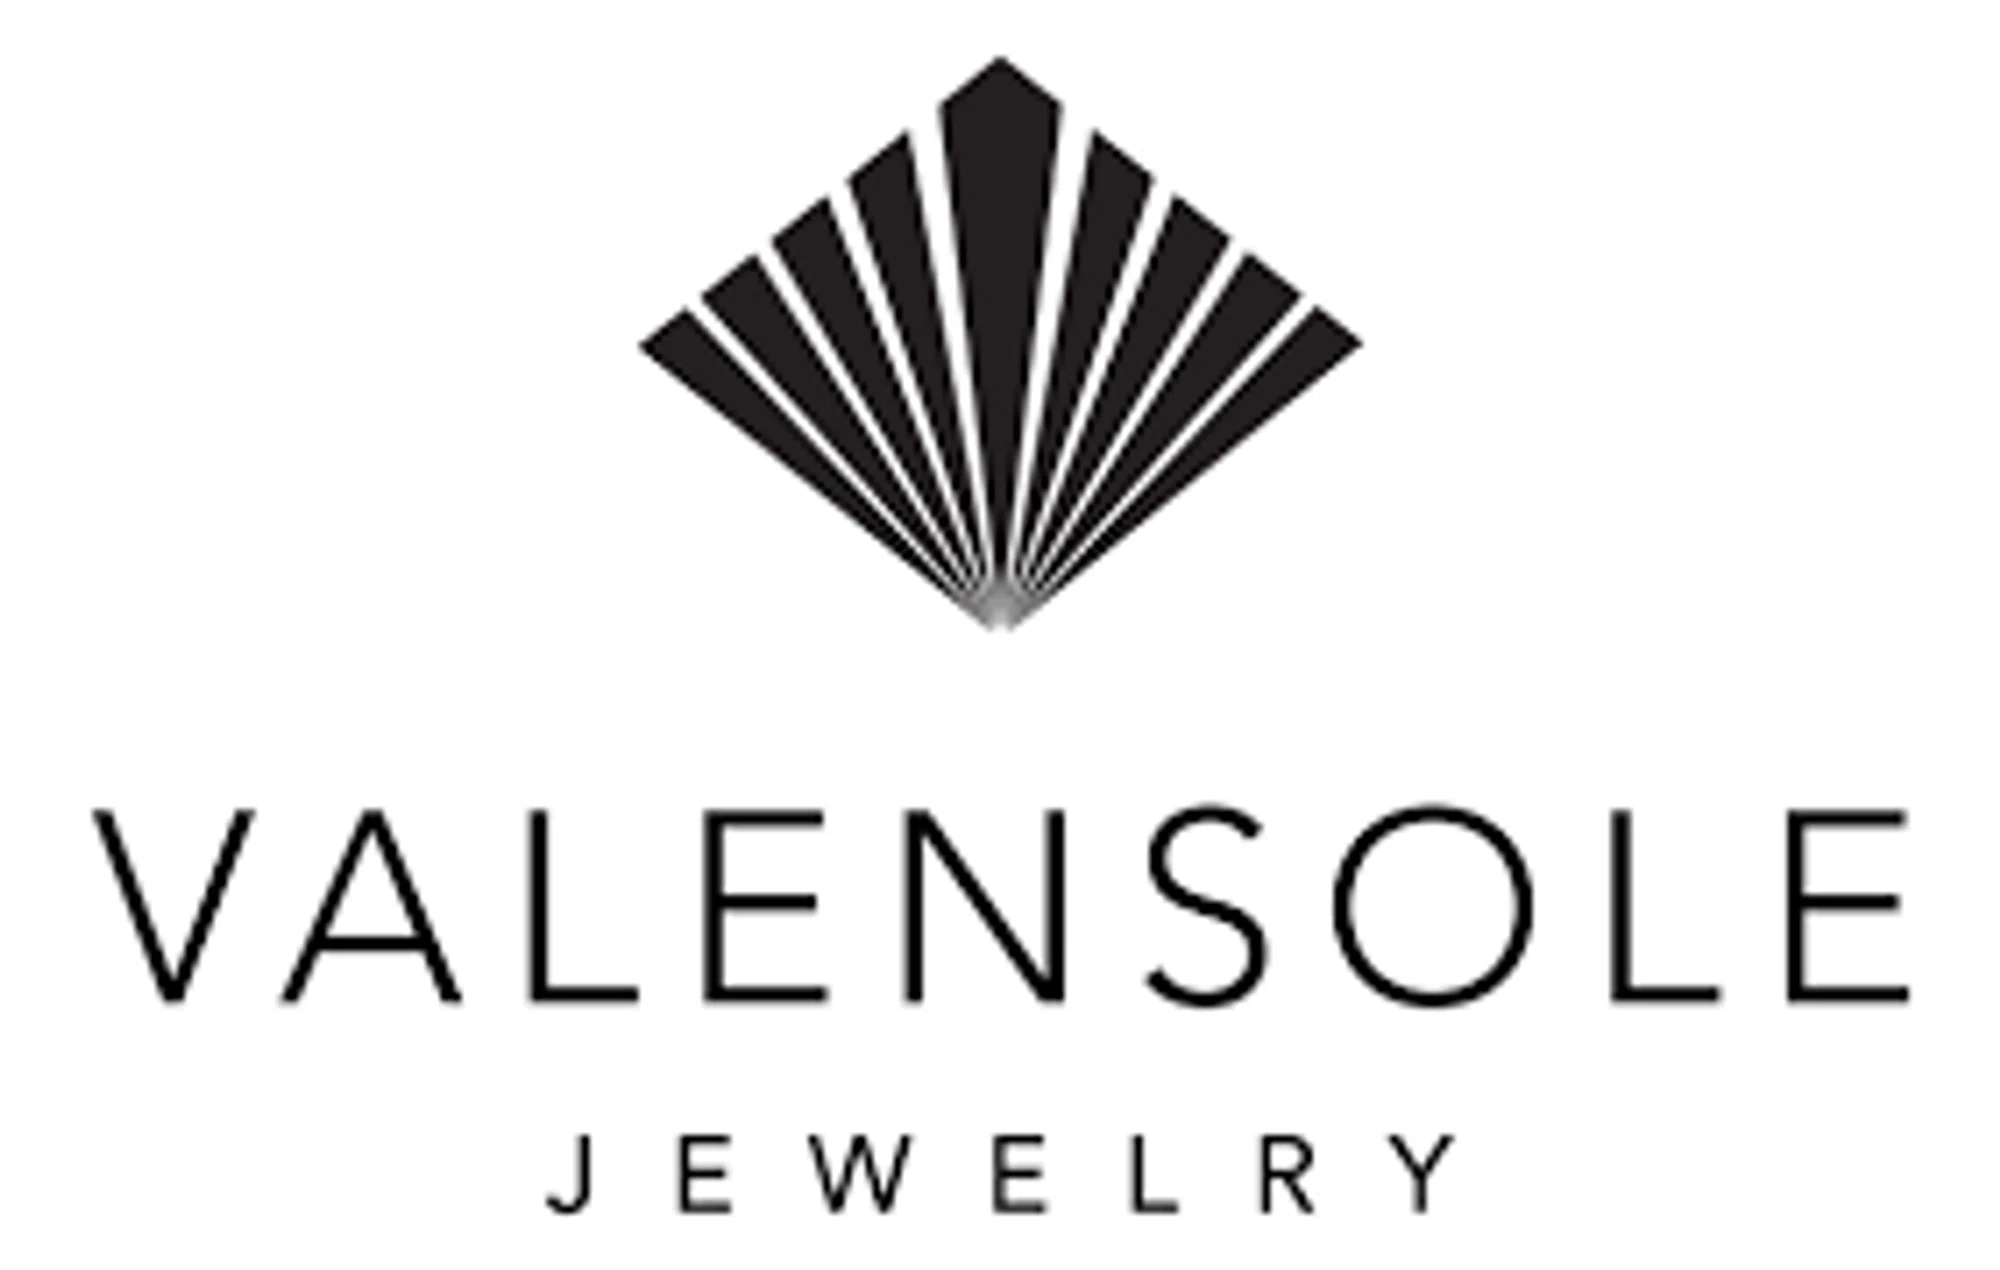 Valensole Jewelry